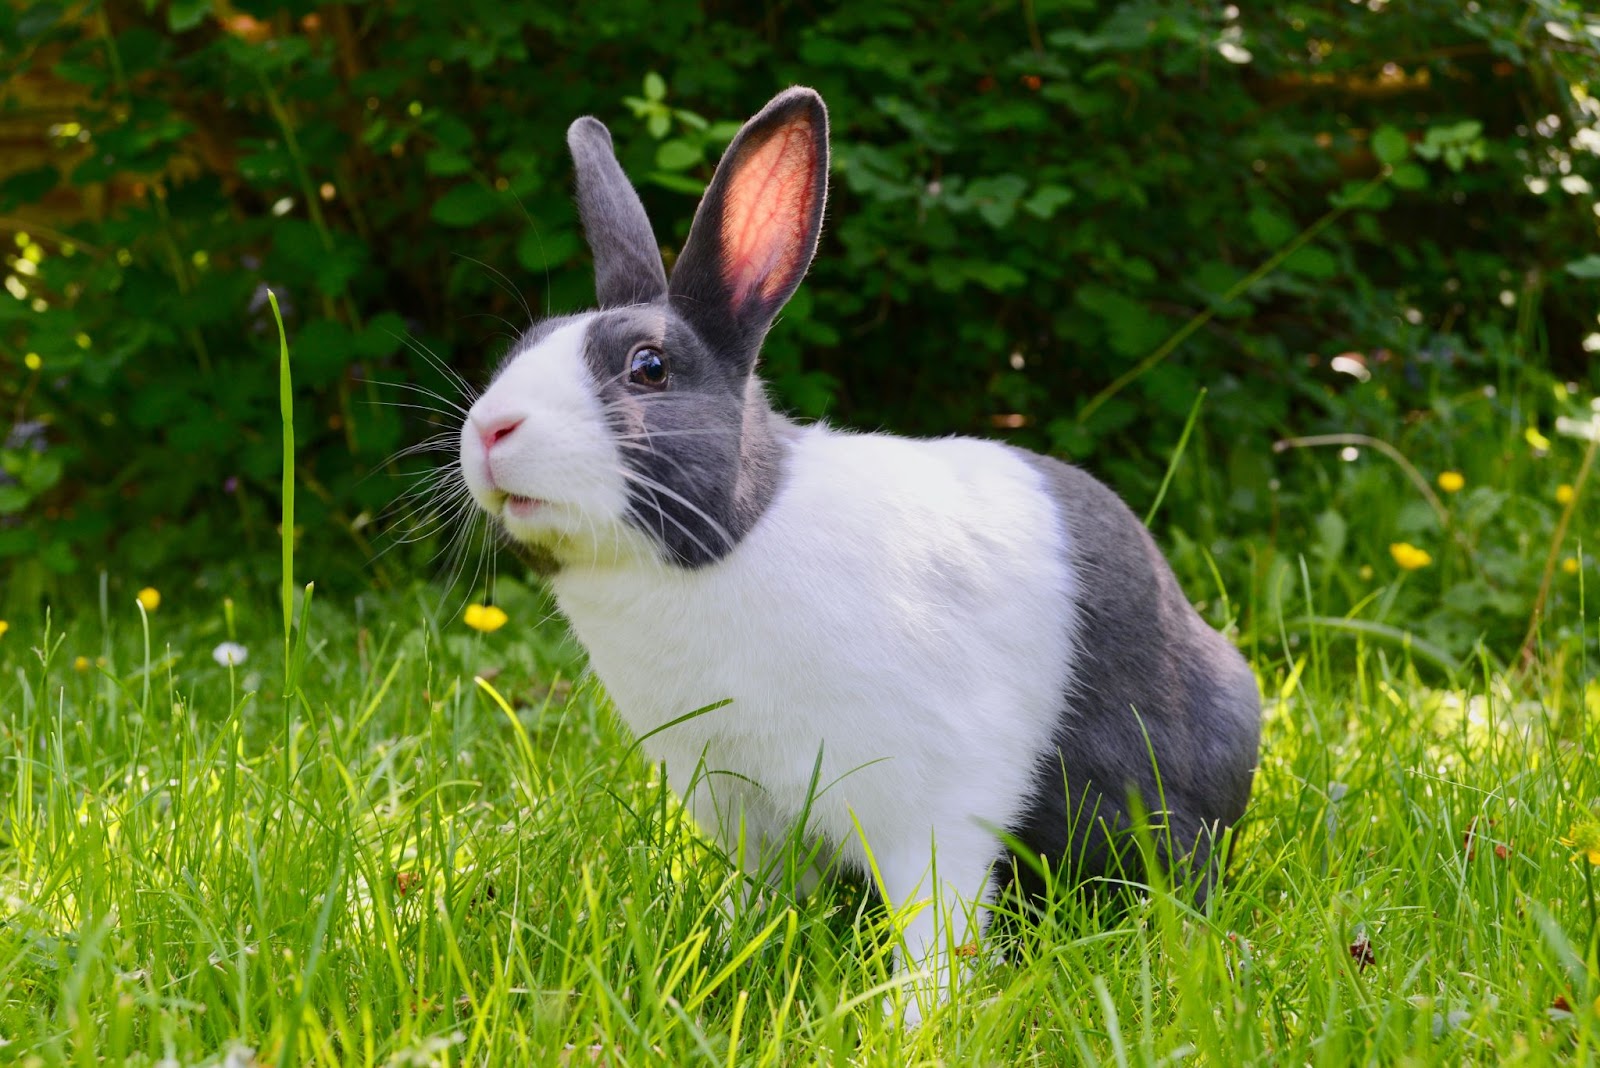 Cute Rabbit in garden